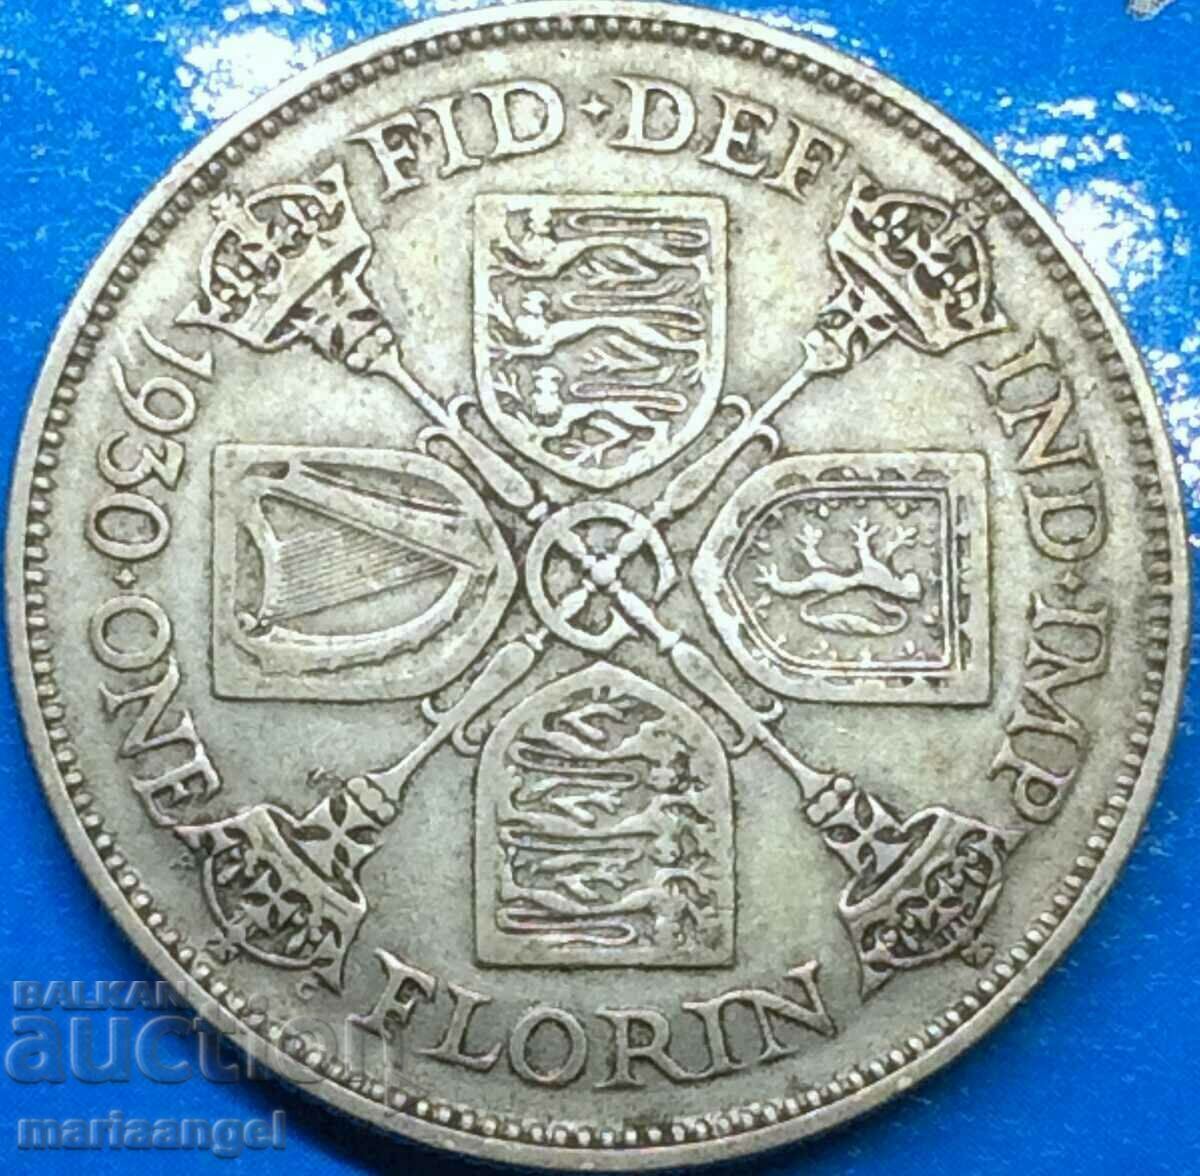 Великобритания 1 флорин 1930 Джордж  VI  голямо сребро